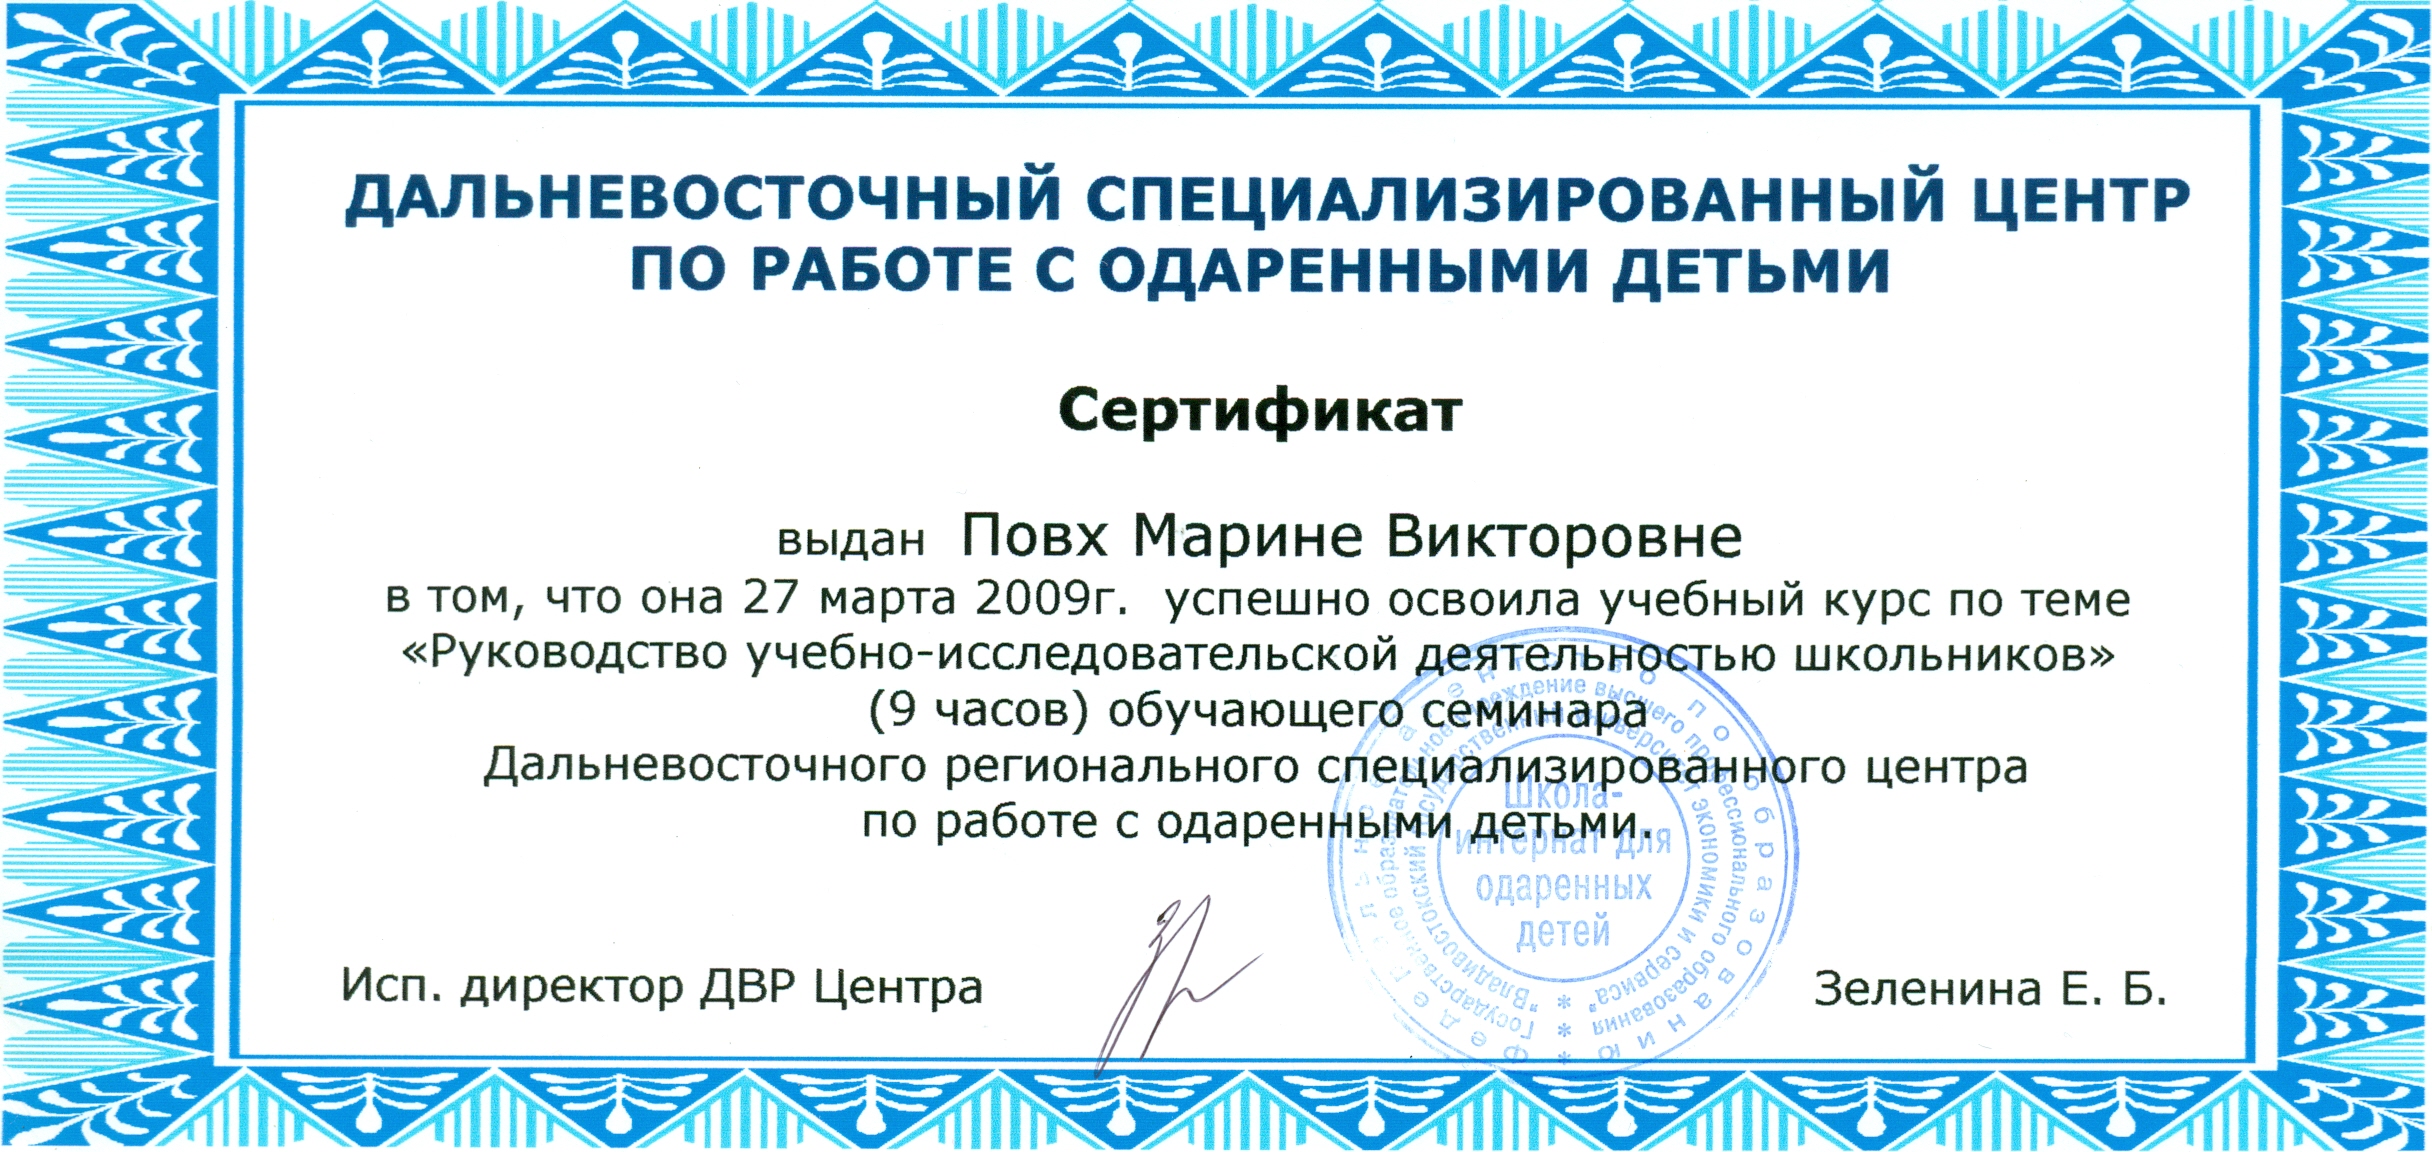 Сертификат0003.jpg